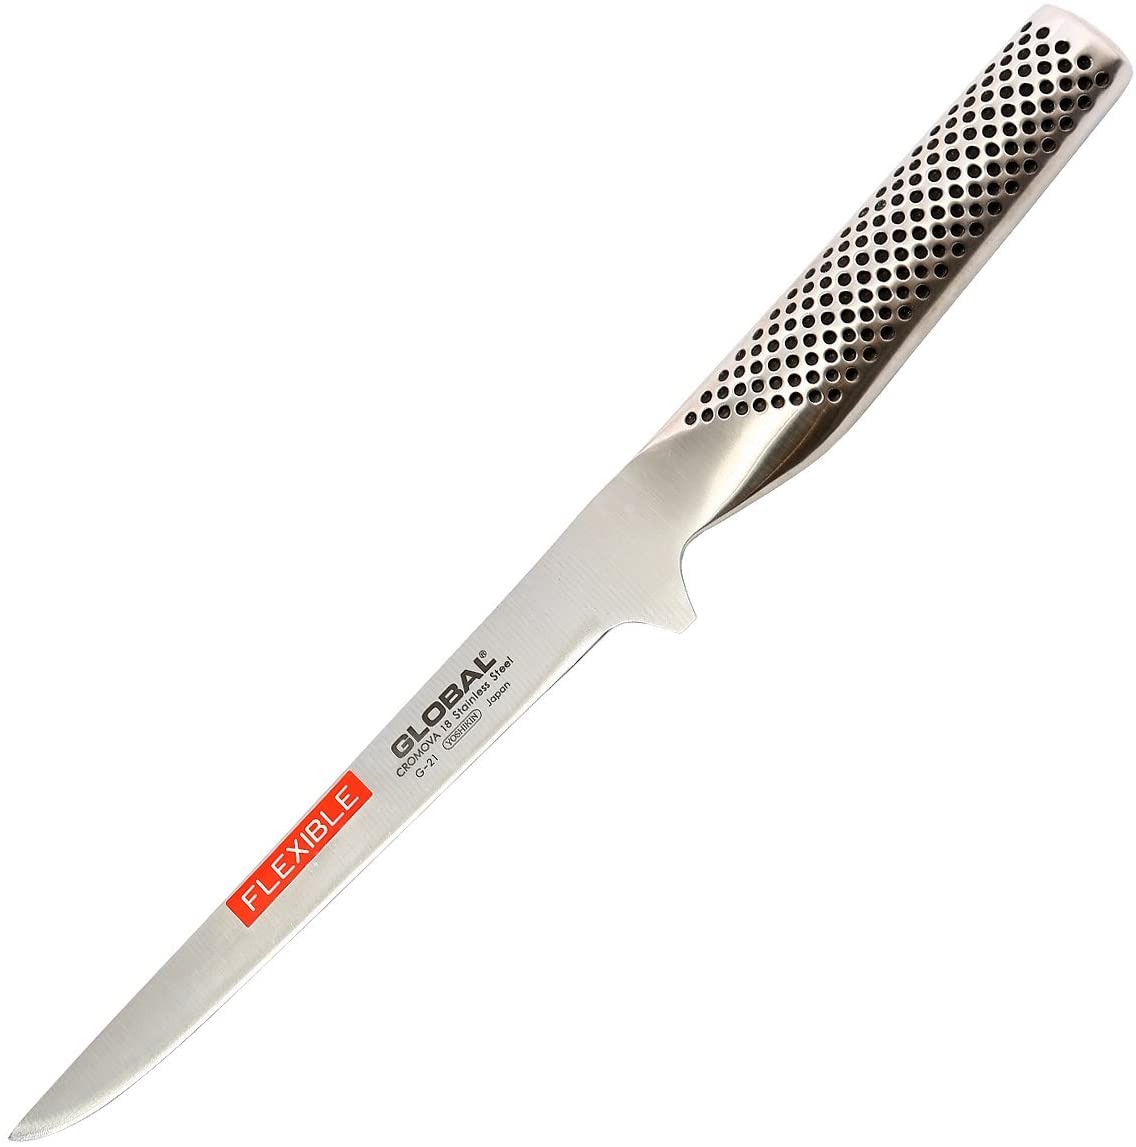 Global Flexible Boning Knife, 6.25-Inch